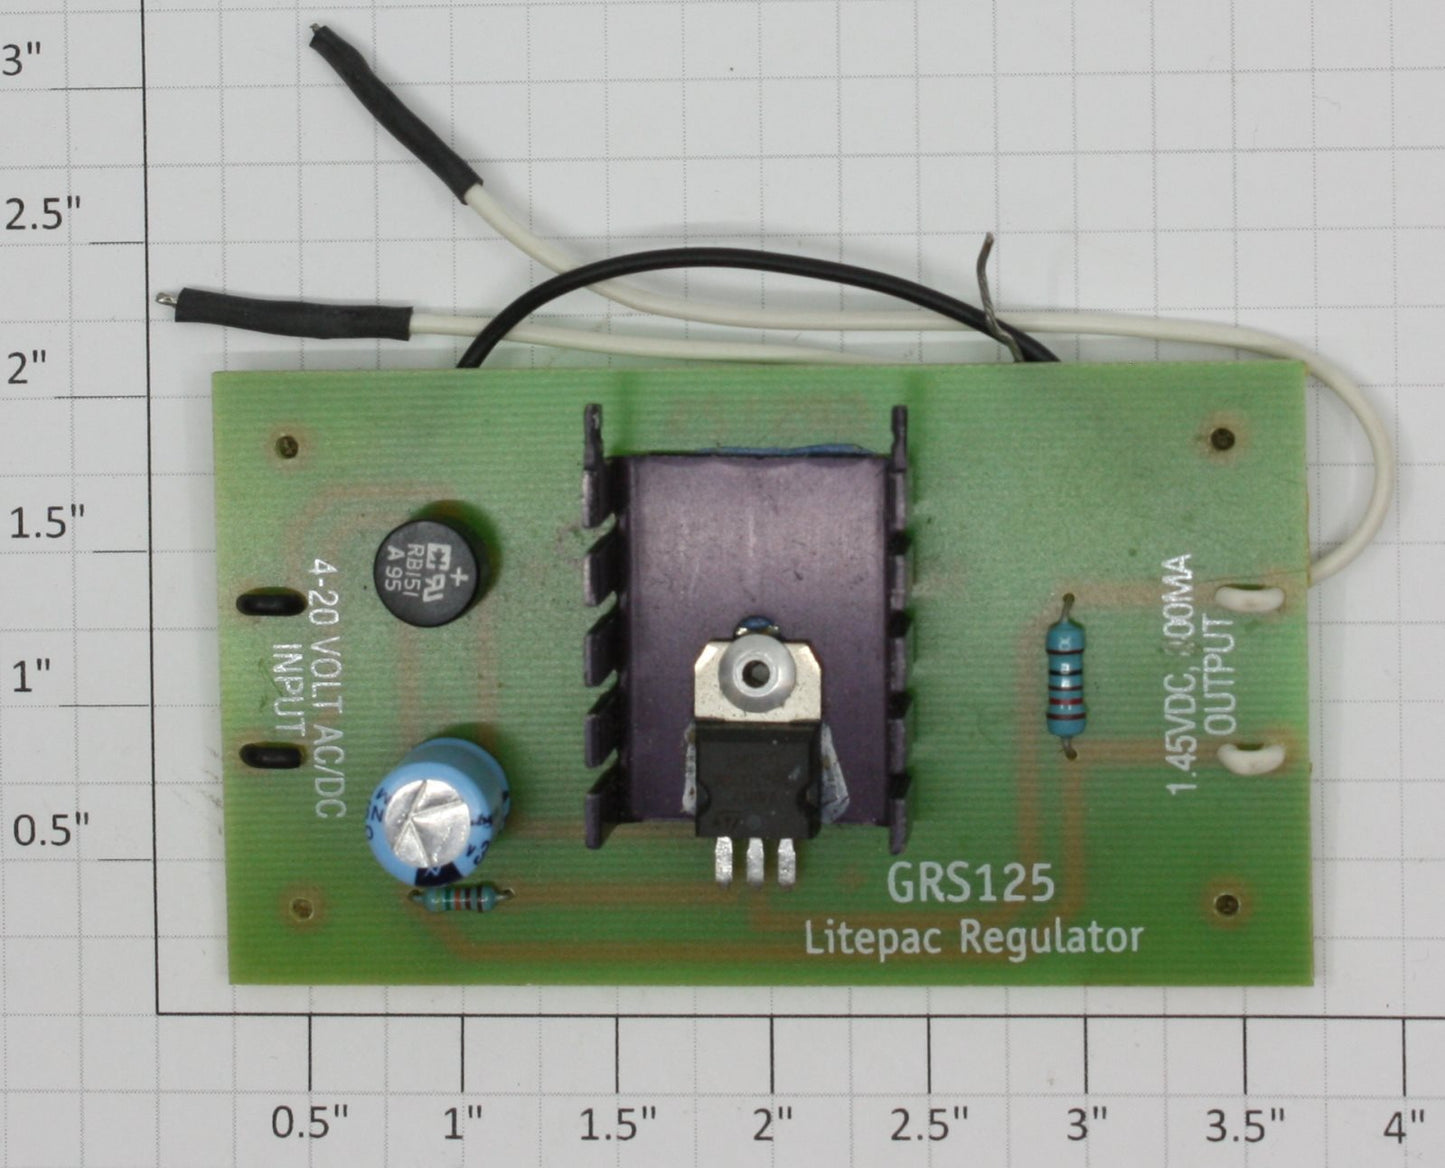 GRS 125 Litepac 4-20 VAC to 1.45 VDC Converter/Regulator